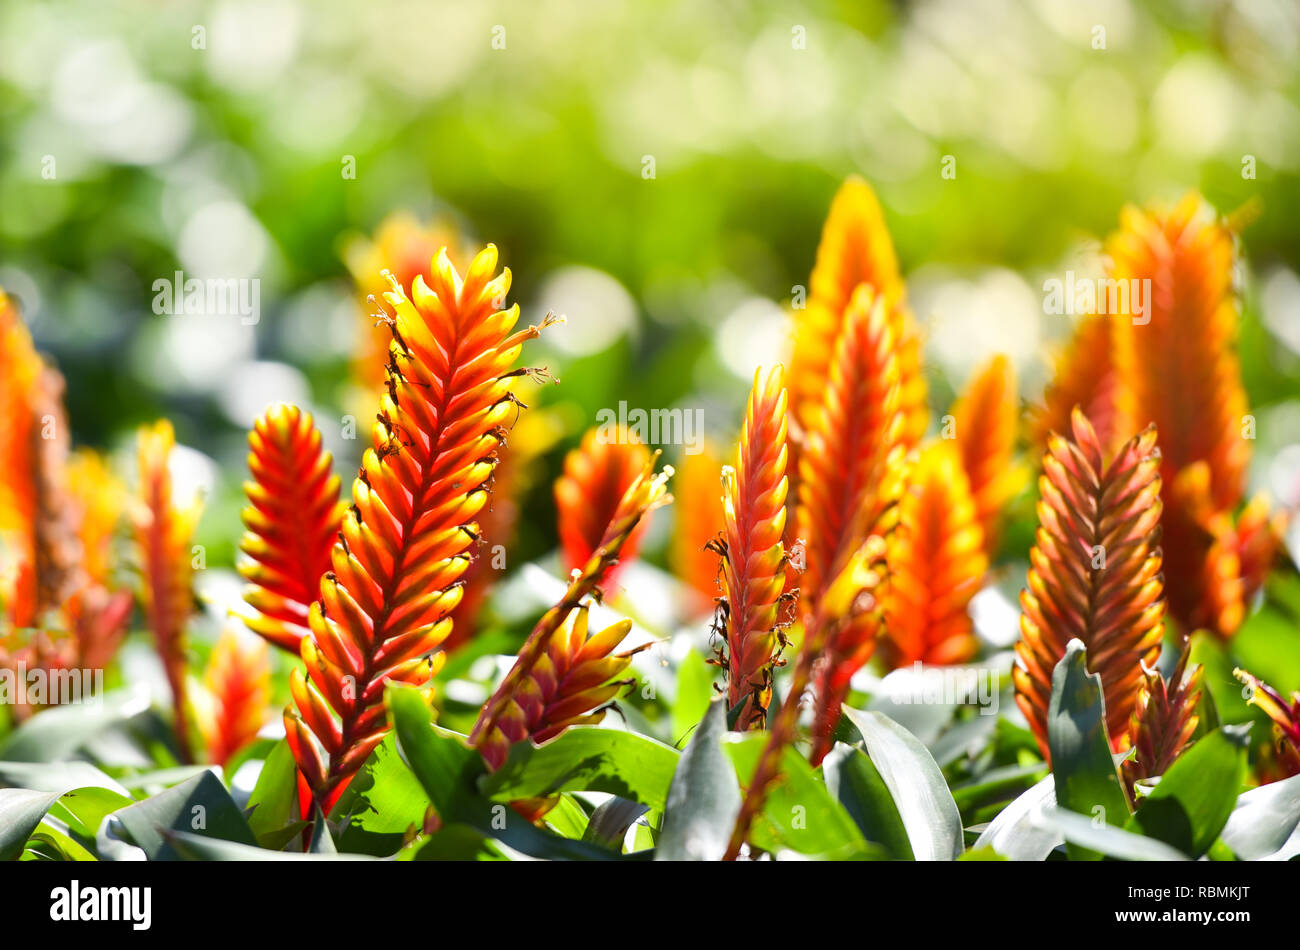 Bromeliad flower / Beautiful orange red and yellow bromeliad in garden nursery on green plants background Stock Photo